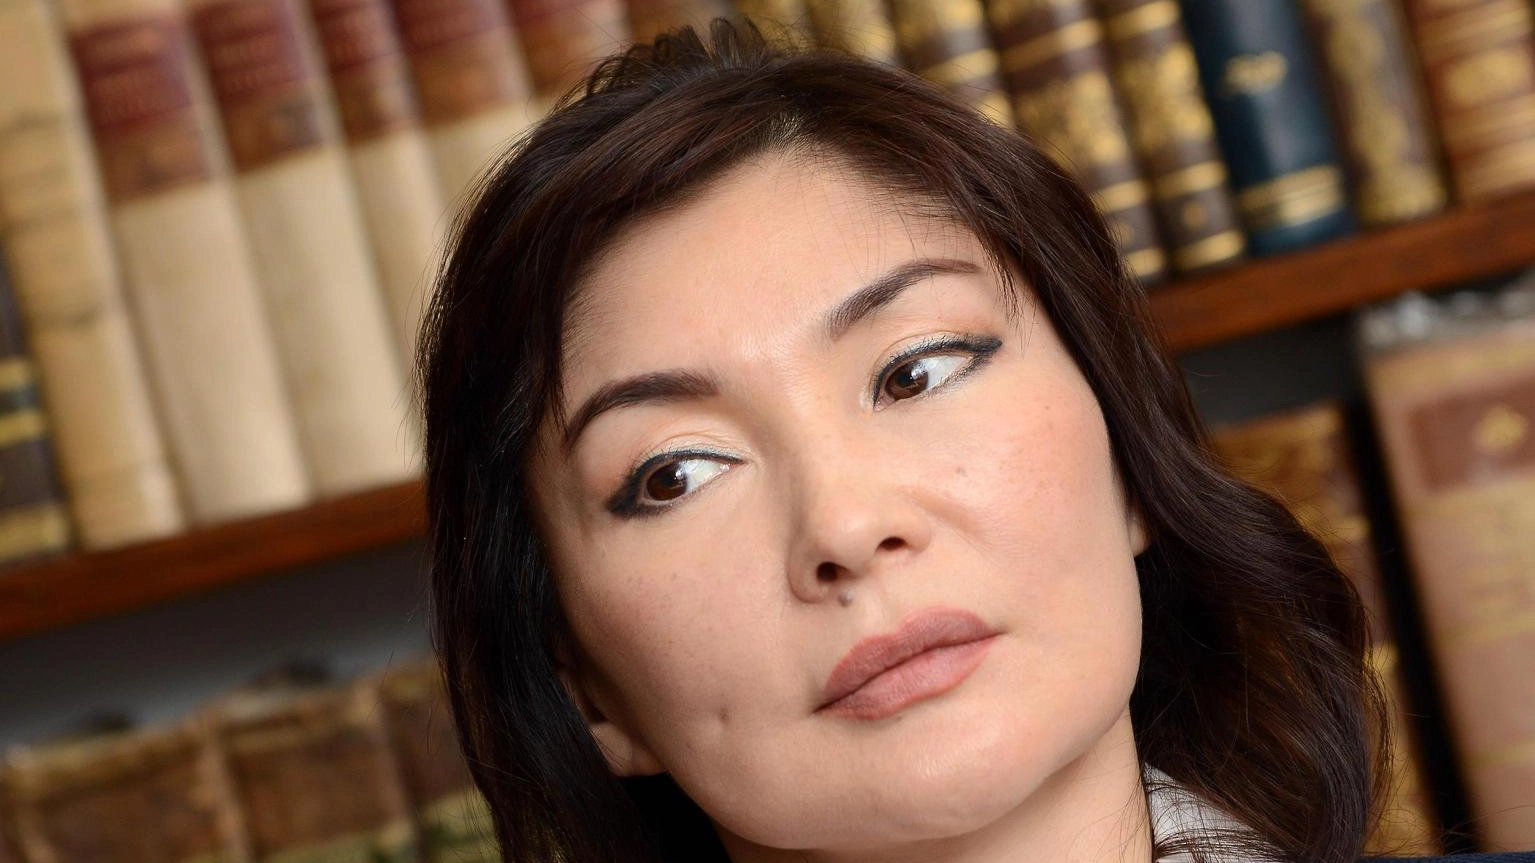 Shalabayeva, Cassazione annulla tutte le assoluzioni